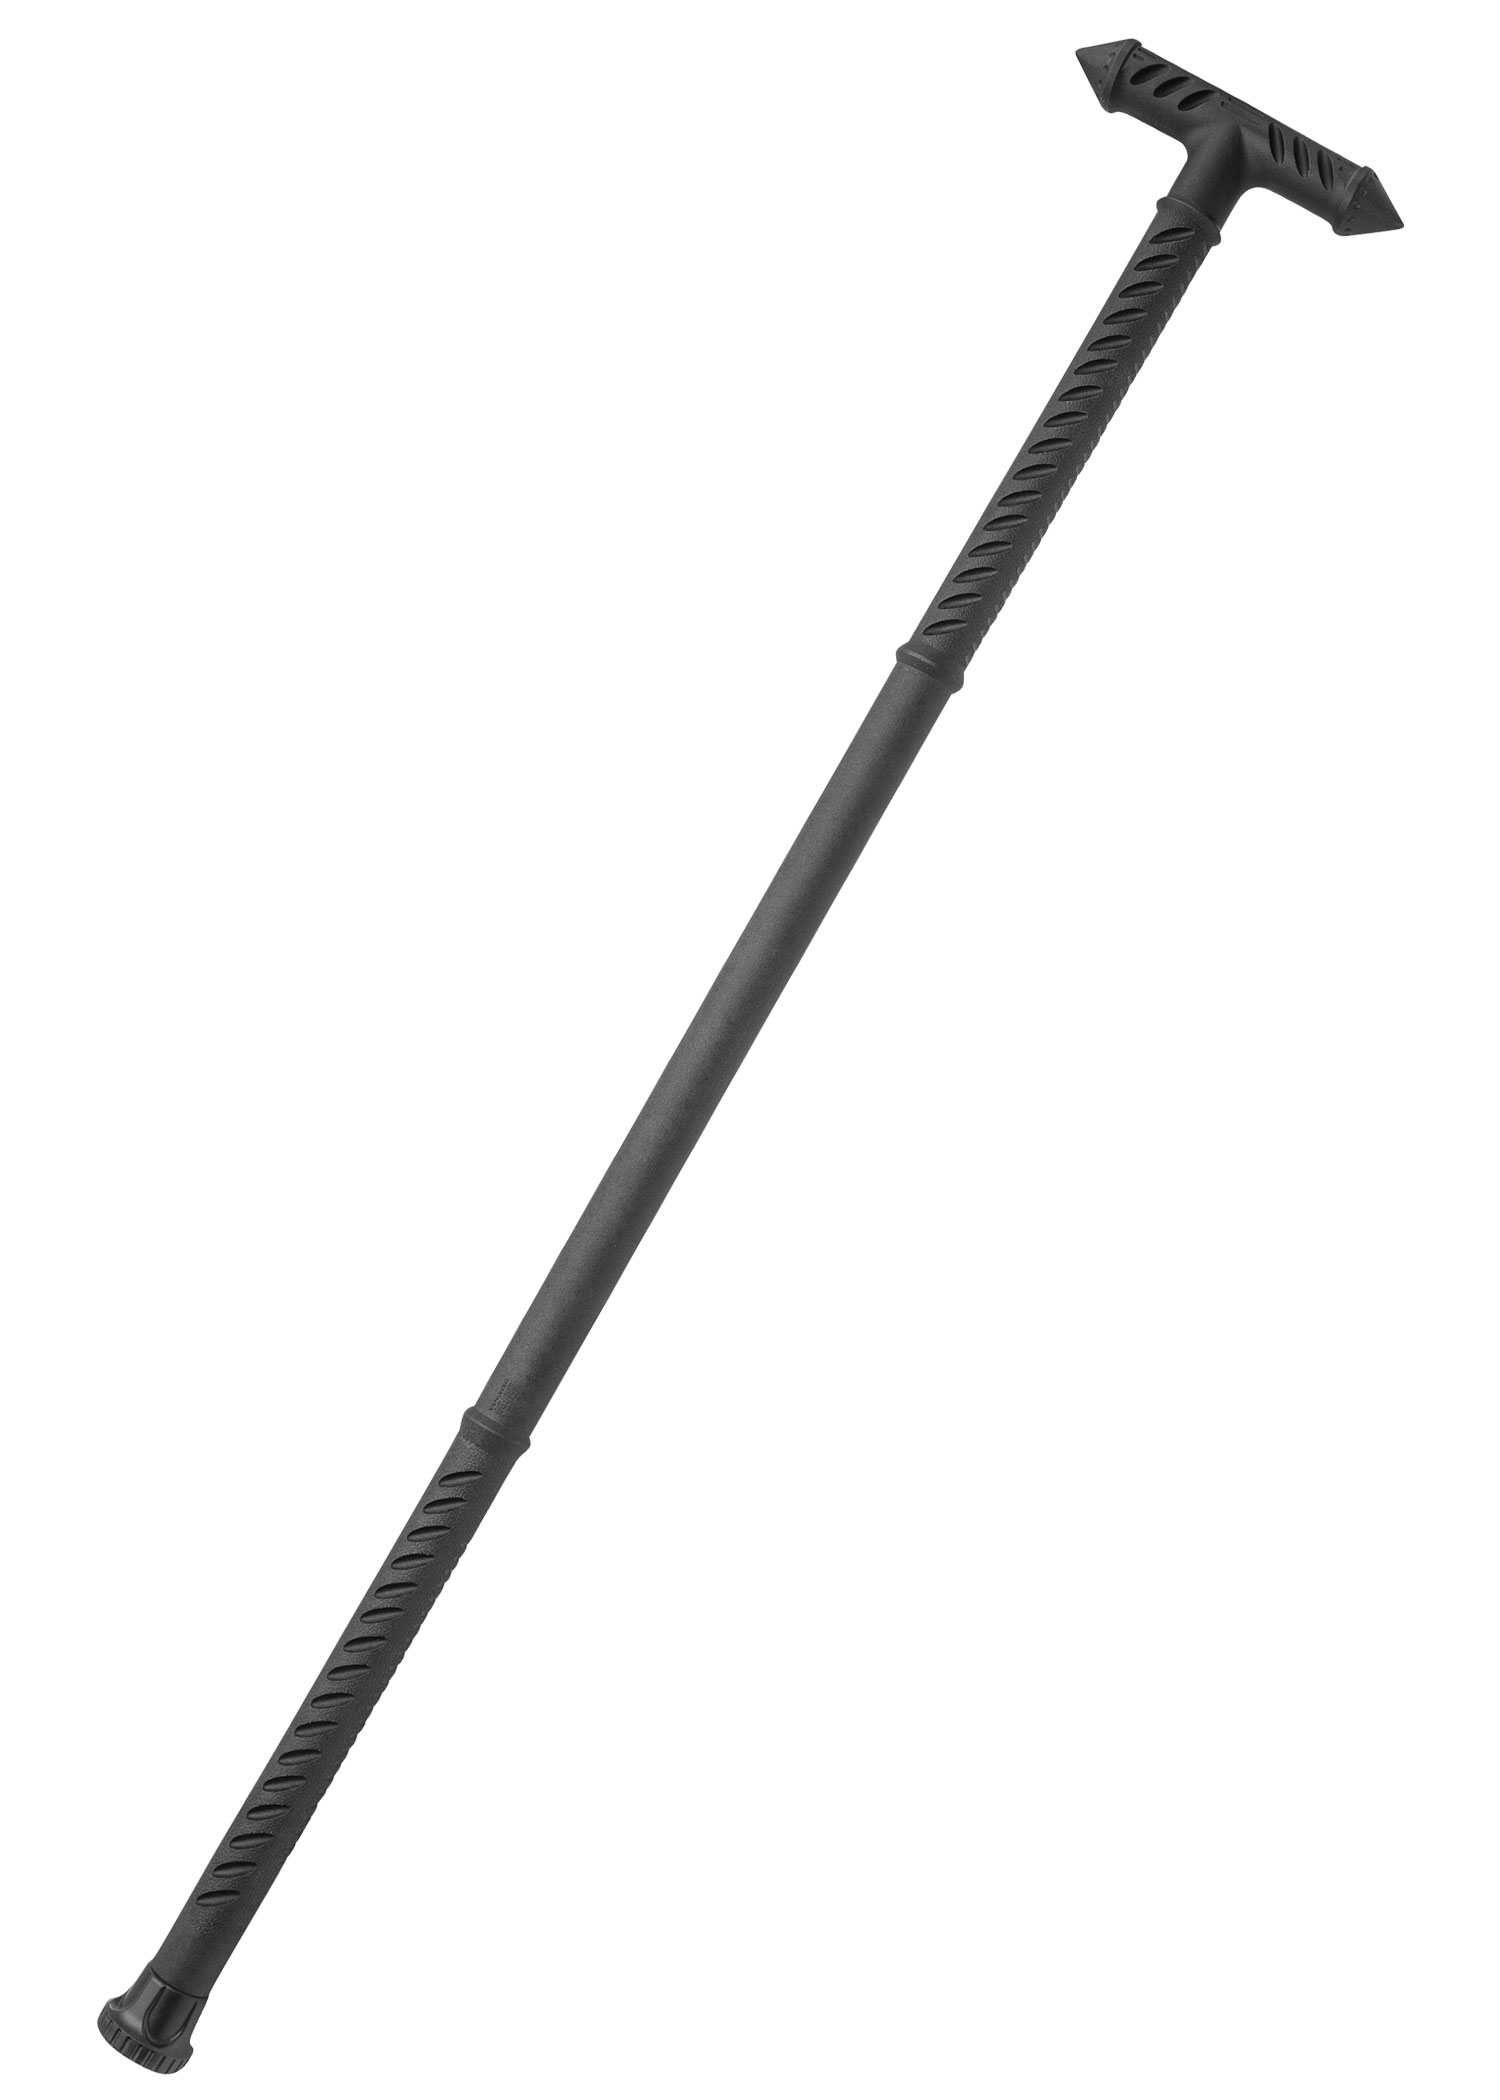 United Cutlery Defense Premium Adjustable Walking Cane 39 Overall